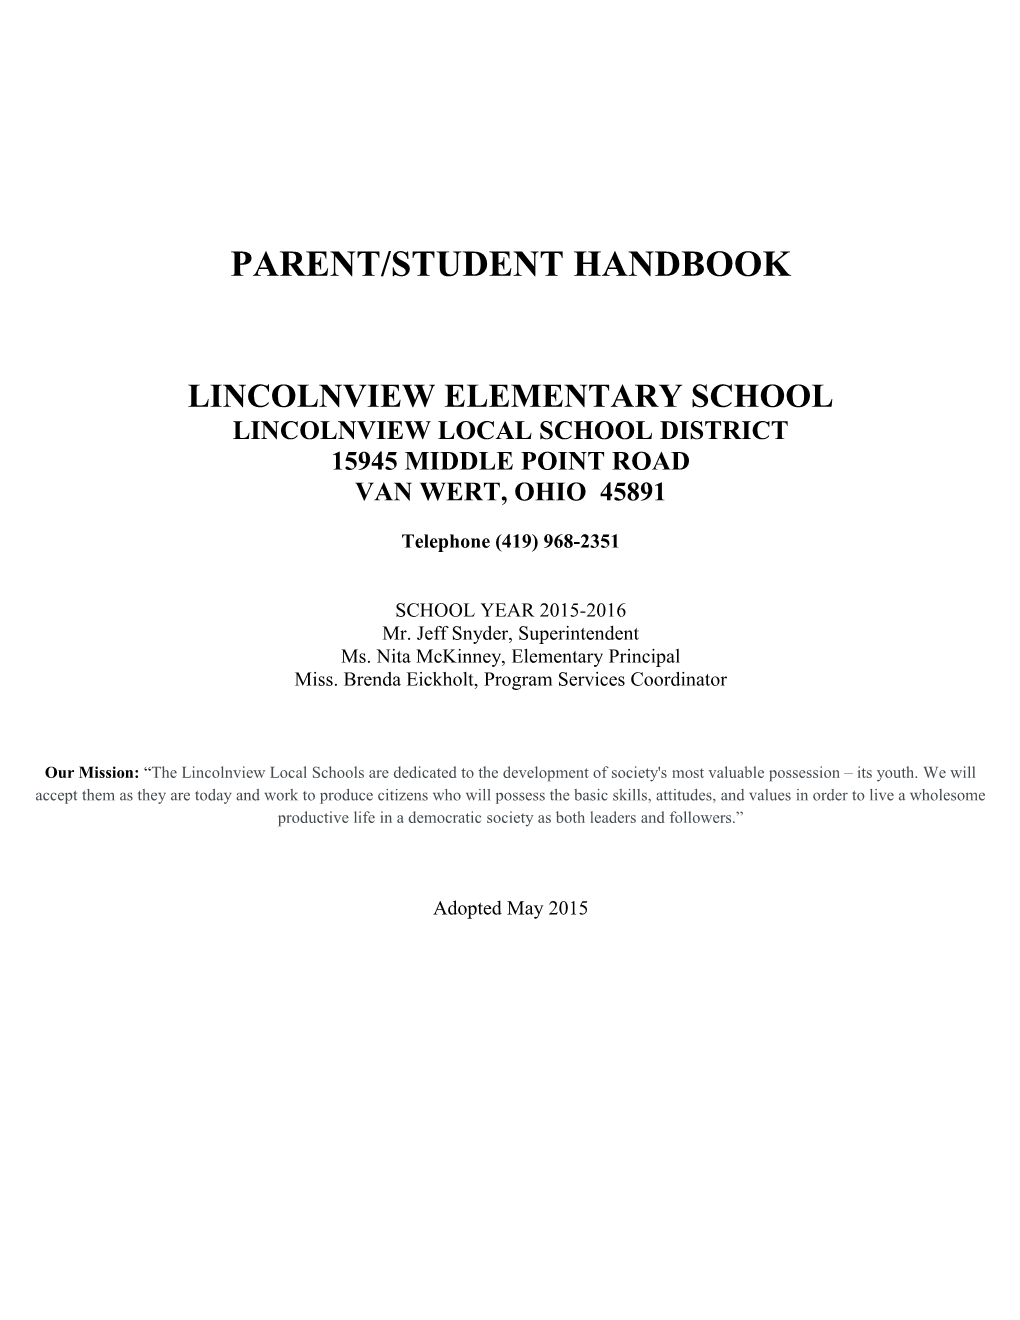 Parent/Student Handbook s3